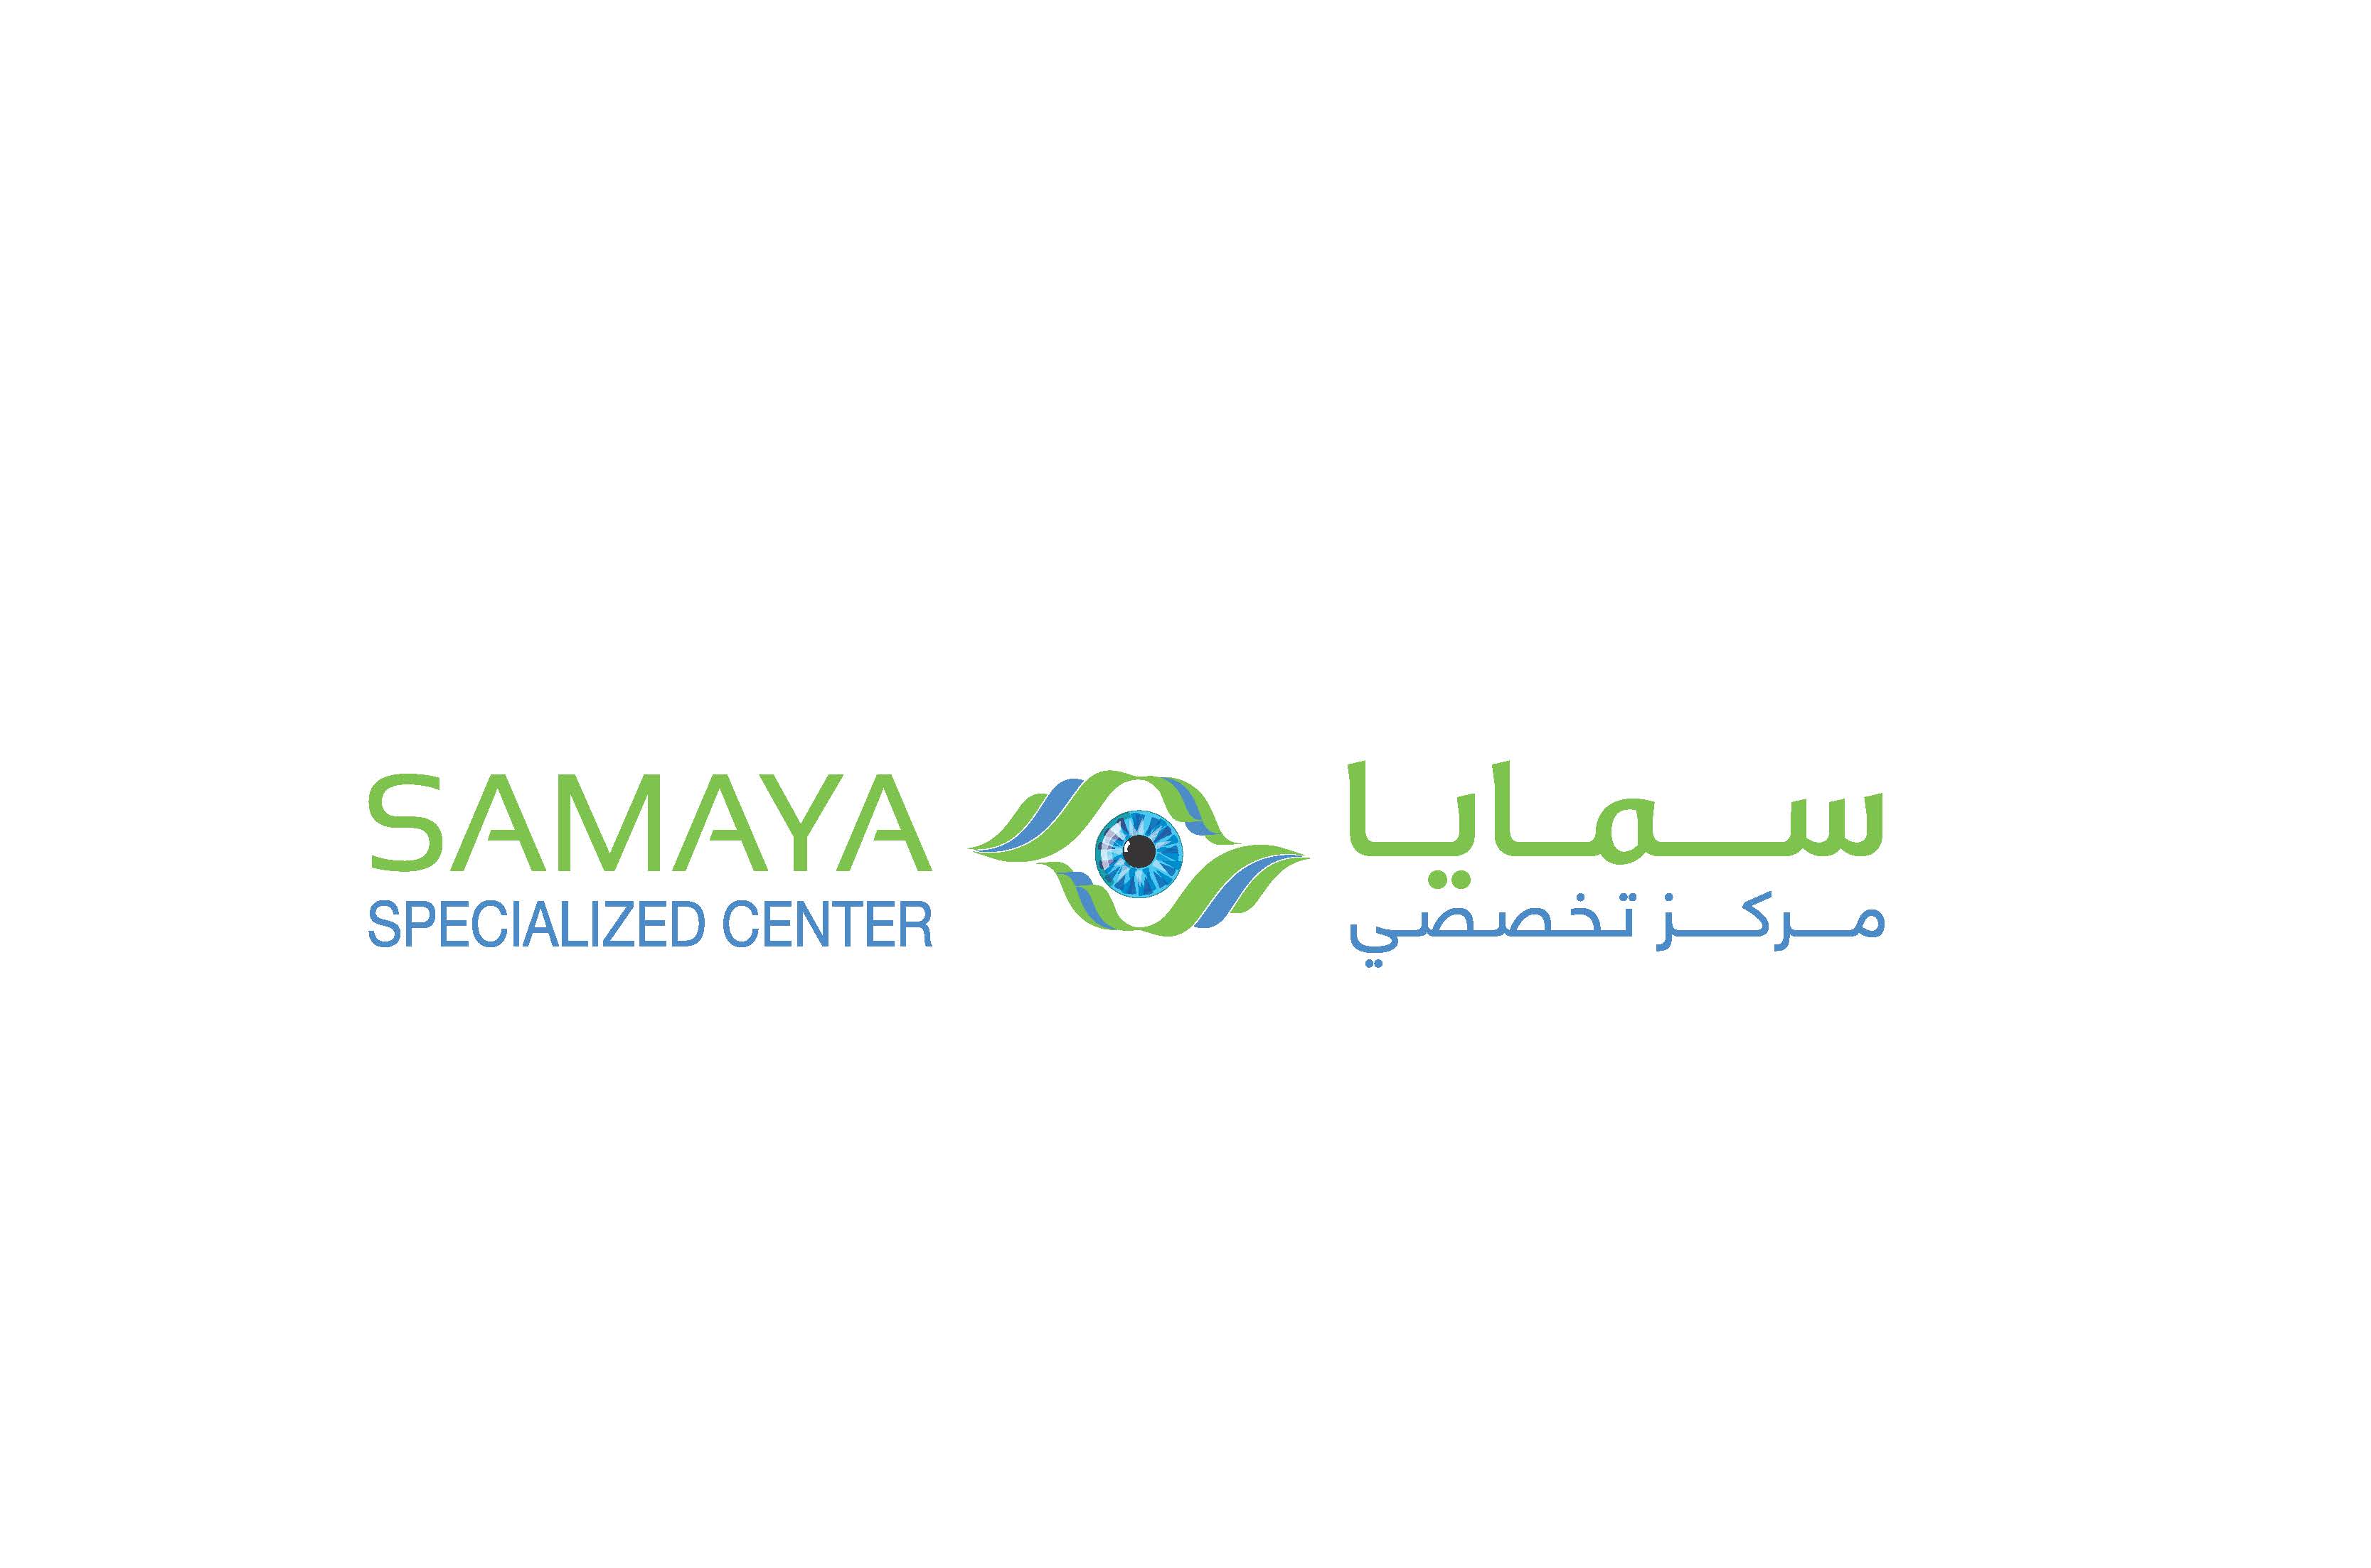 Samaya Specialized Center